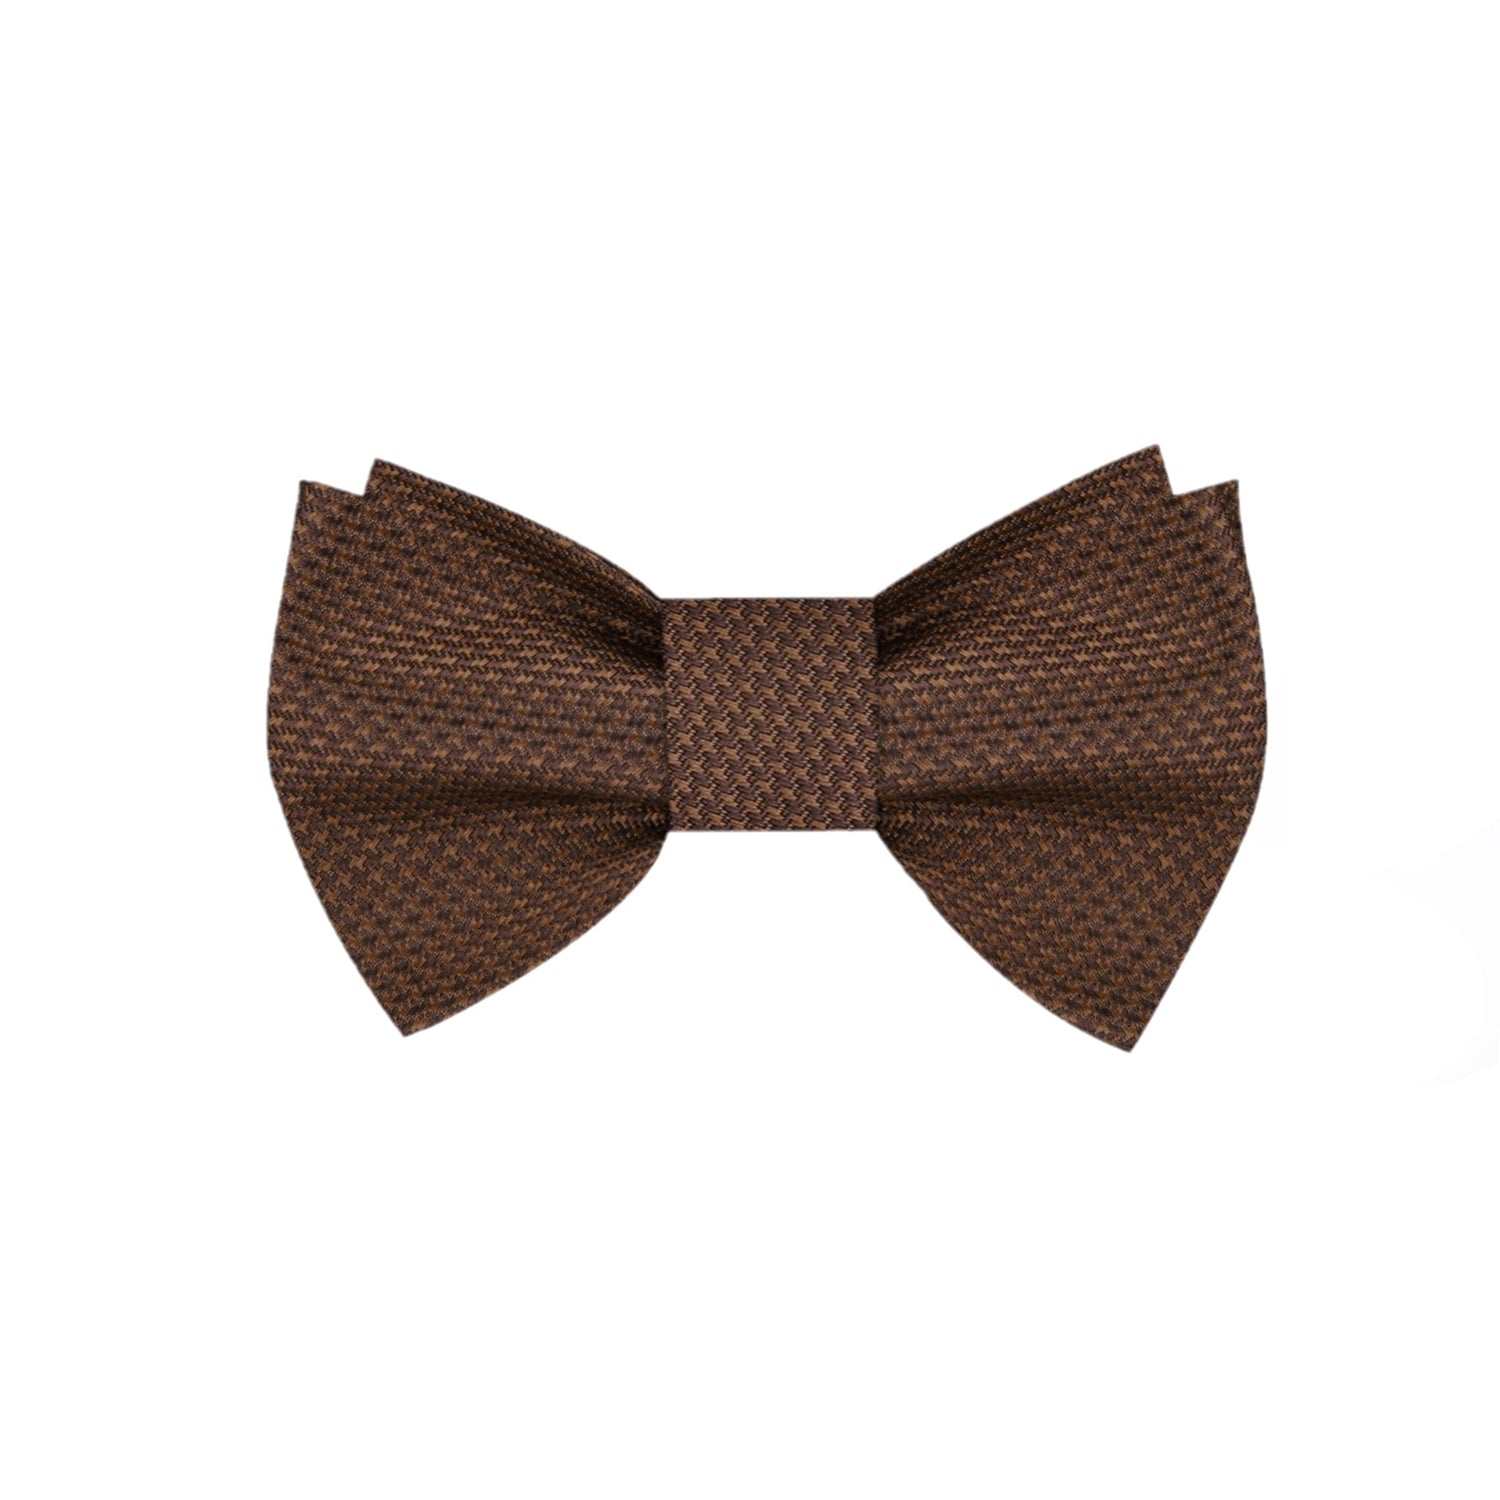 A Brown Houndstooth Pattern Silk Self Tie Bow Tie